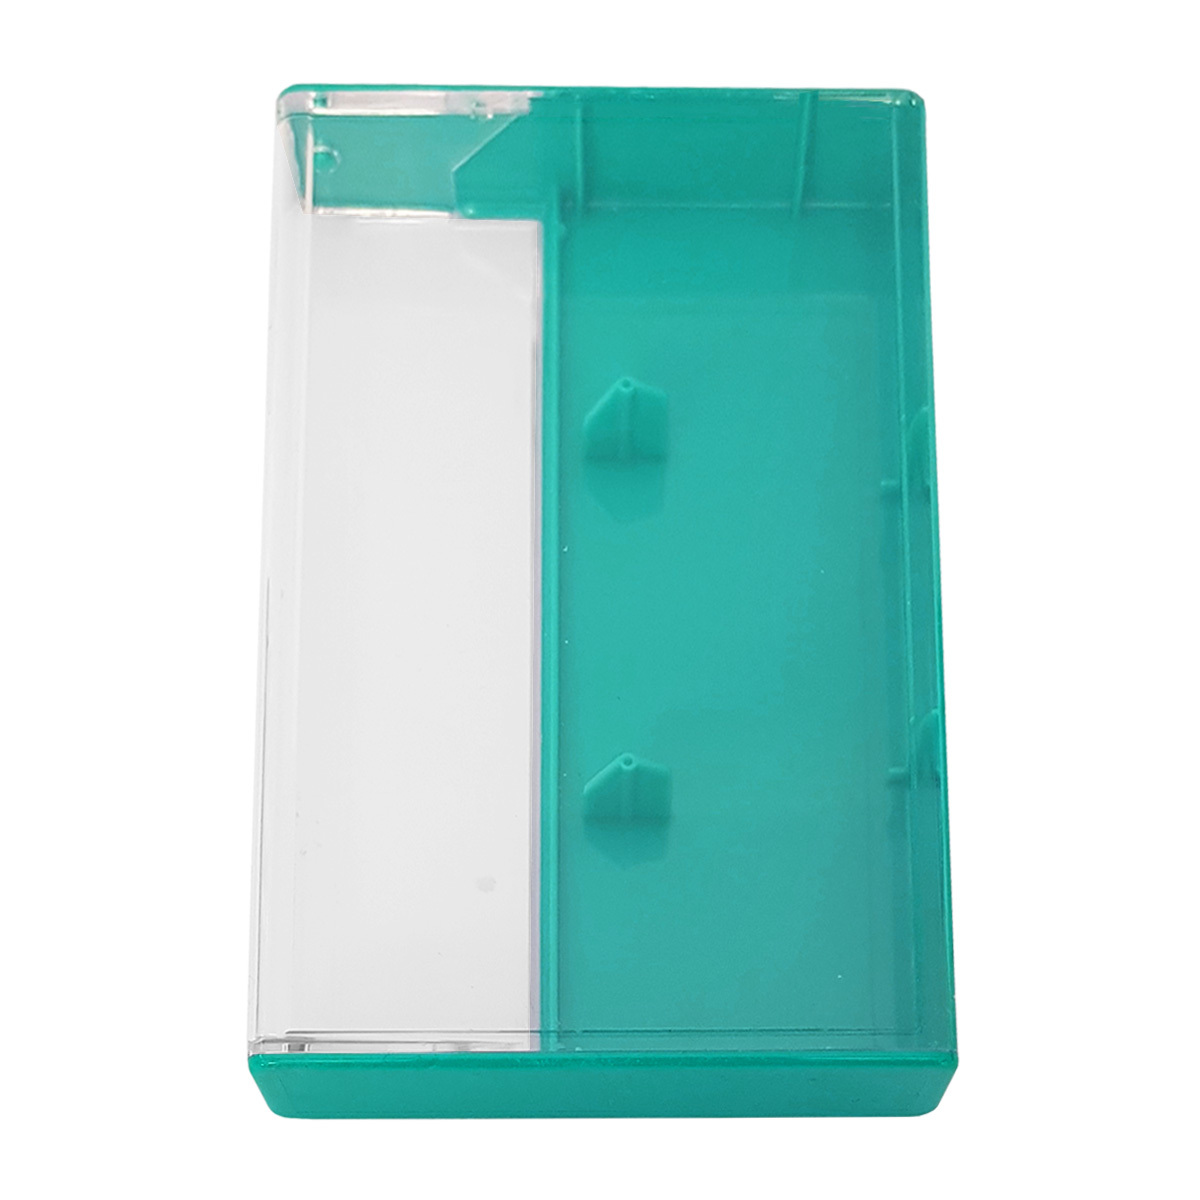 Turquoise single cassette case - Retro Style Media